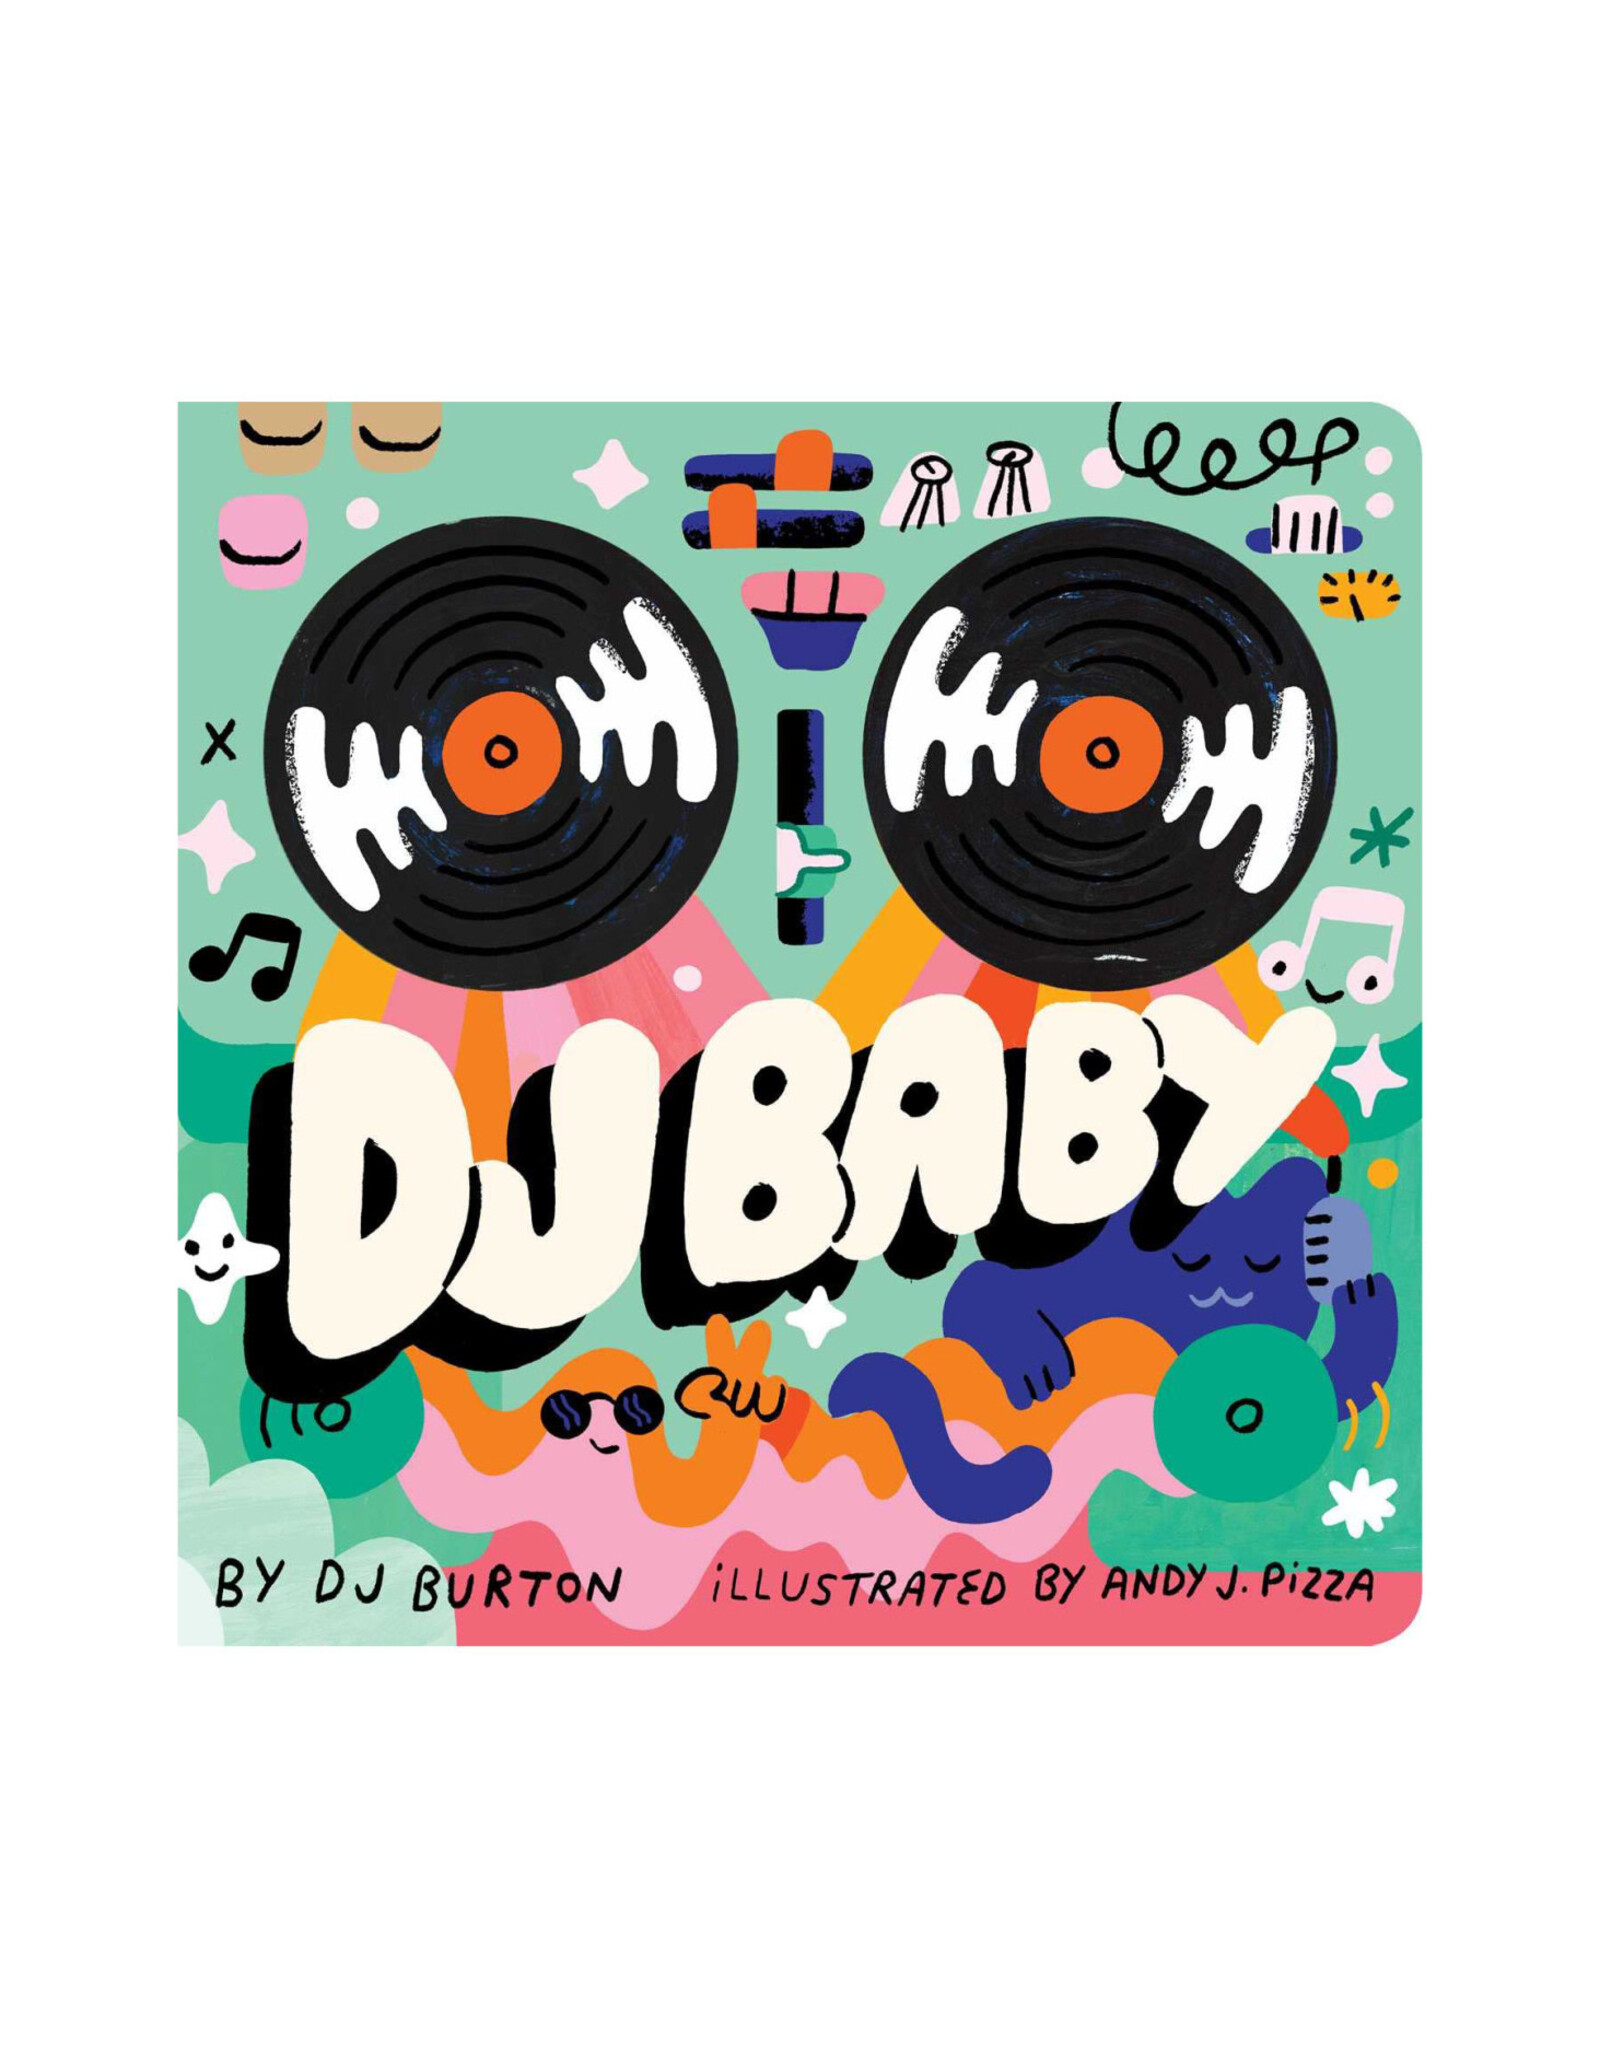 DJ Baby - Seconds Sale